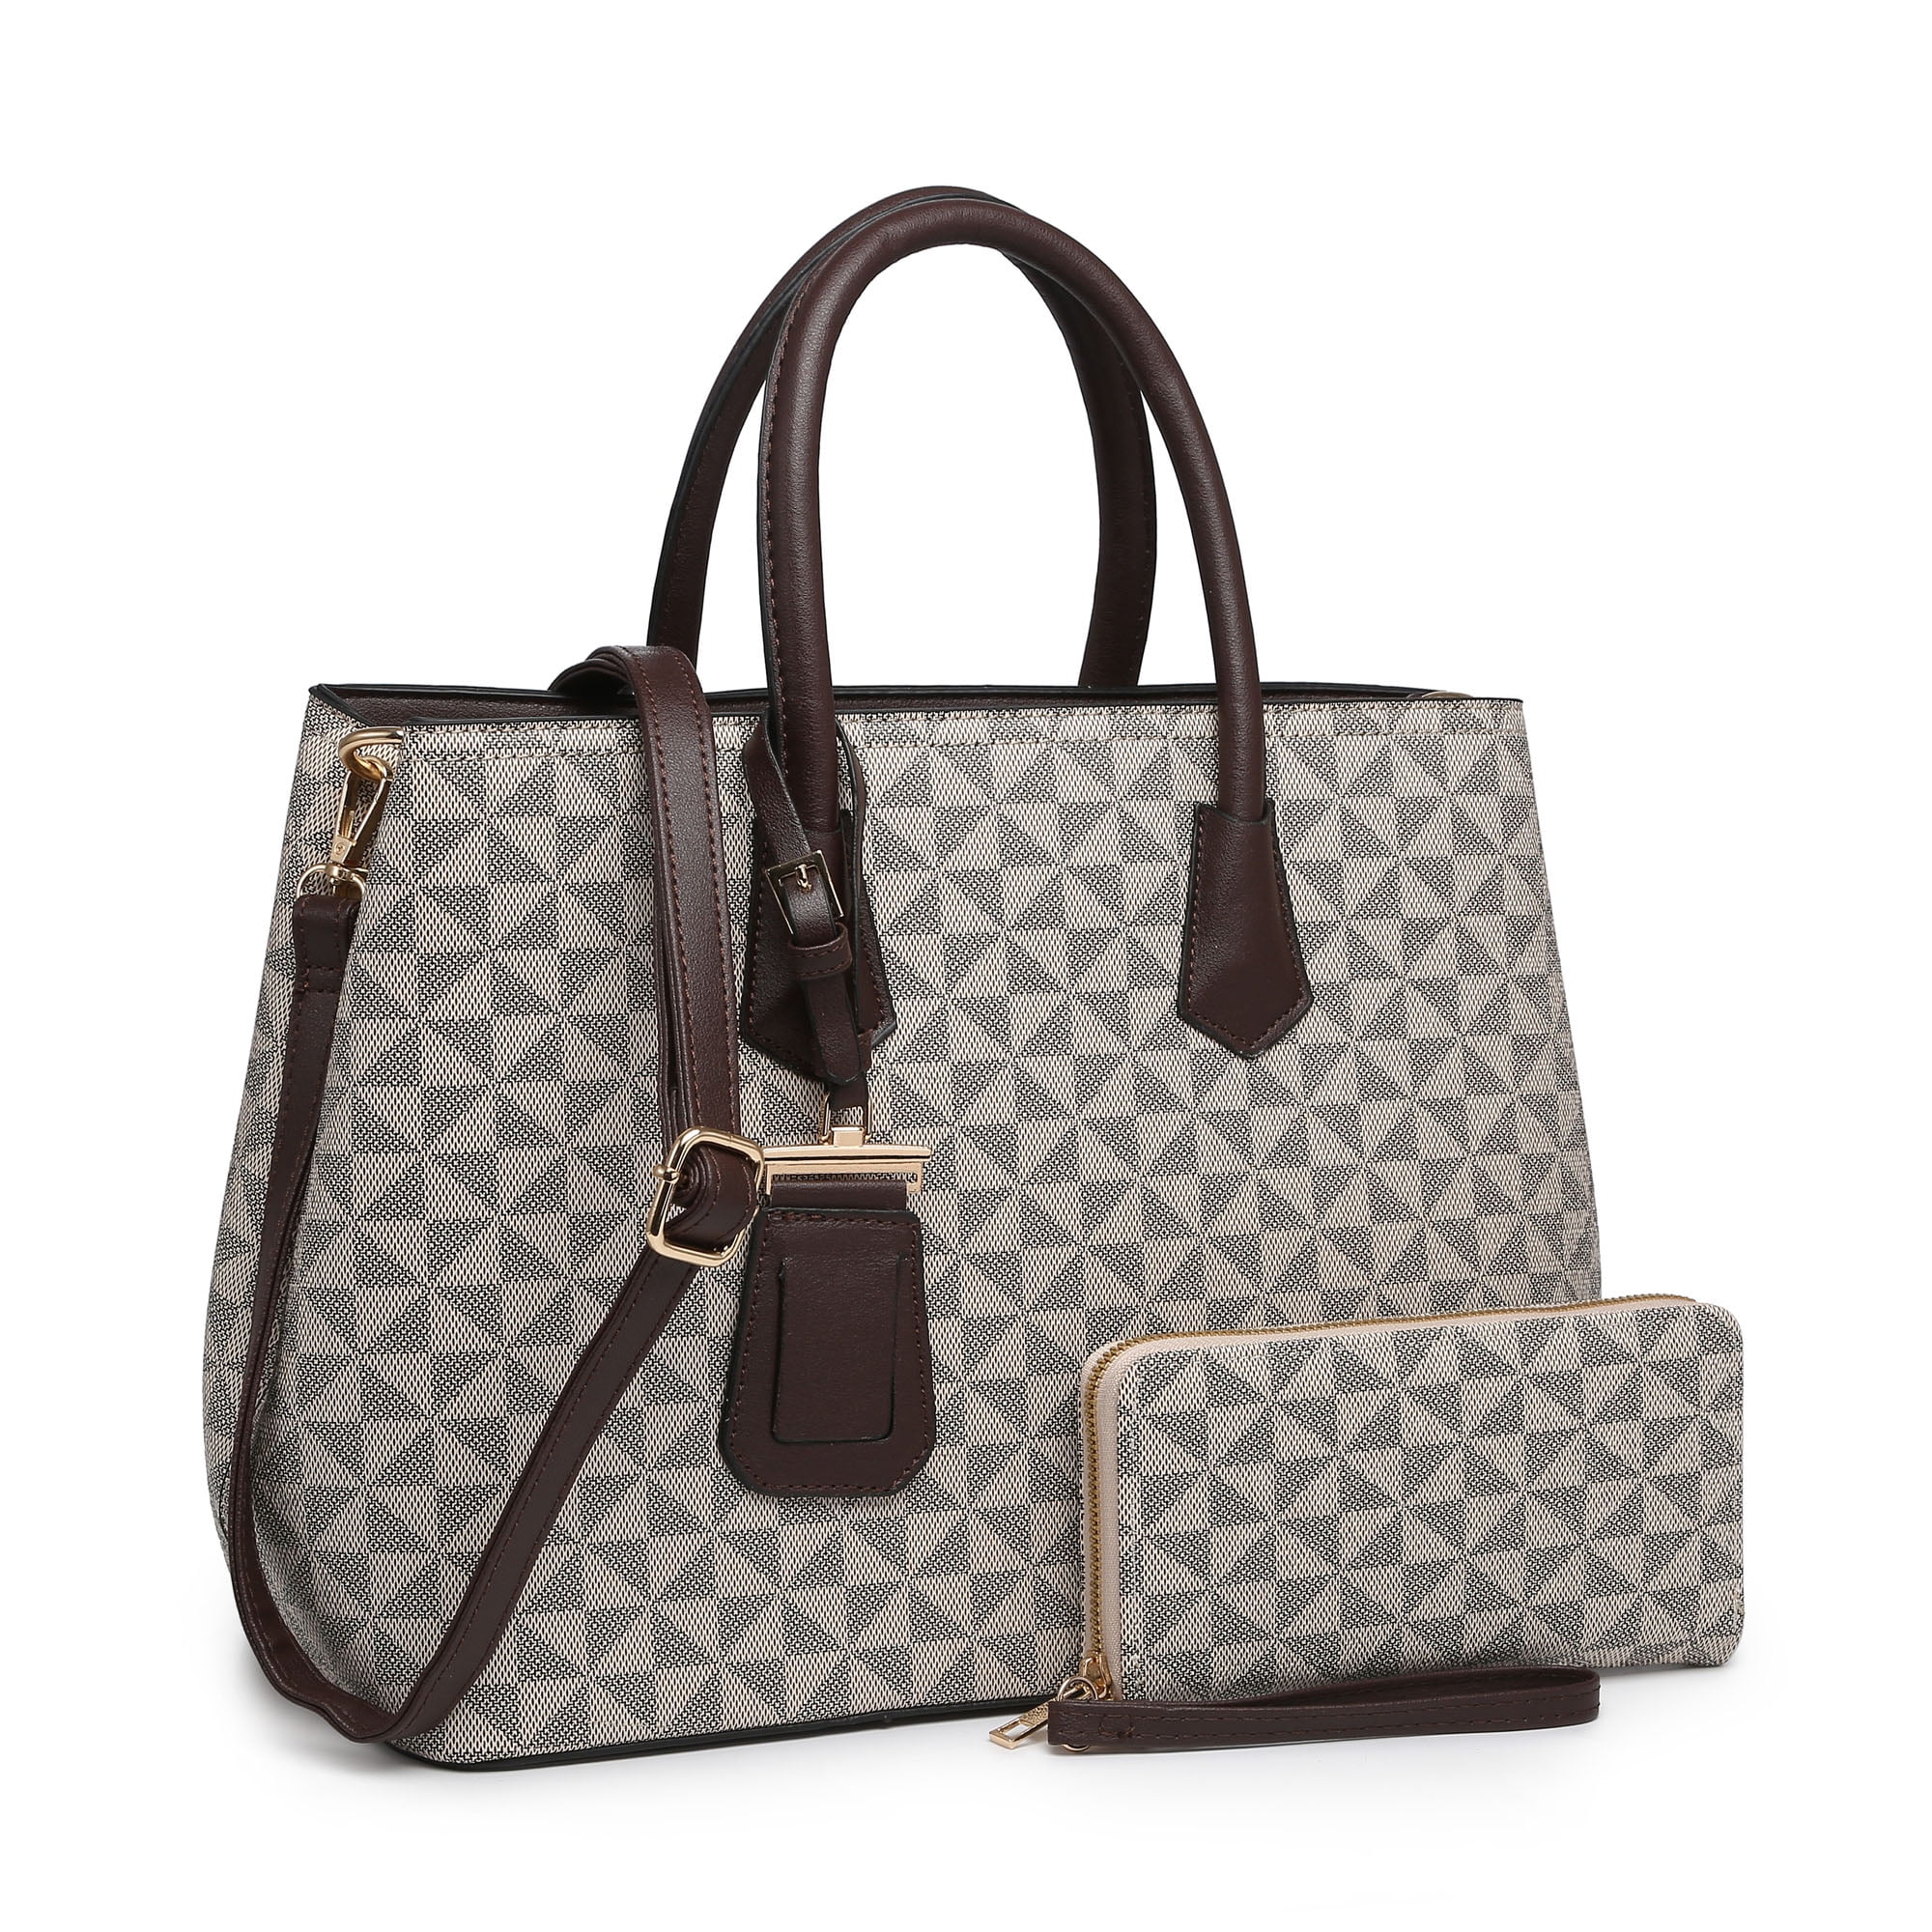 New Womens Handbags Faux Leather Satchel Tote Bags Shoulder Bag Purse w/ Wallet 